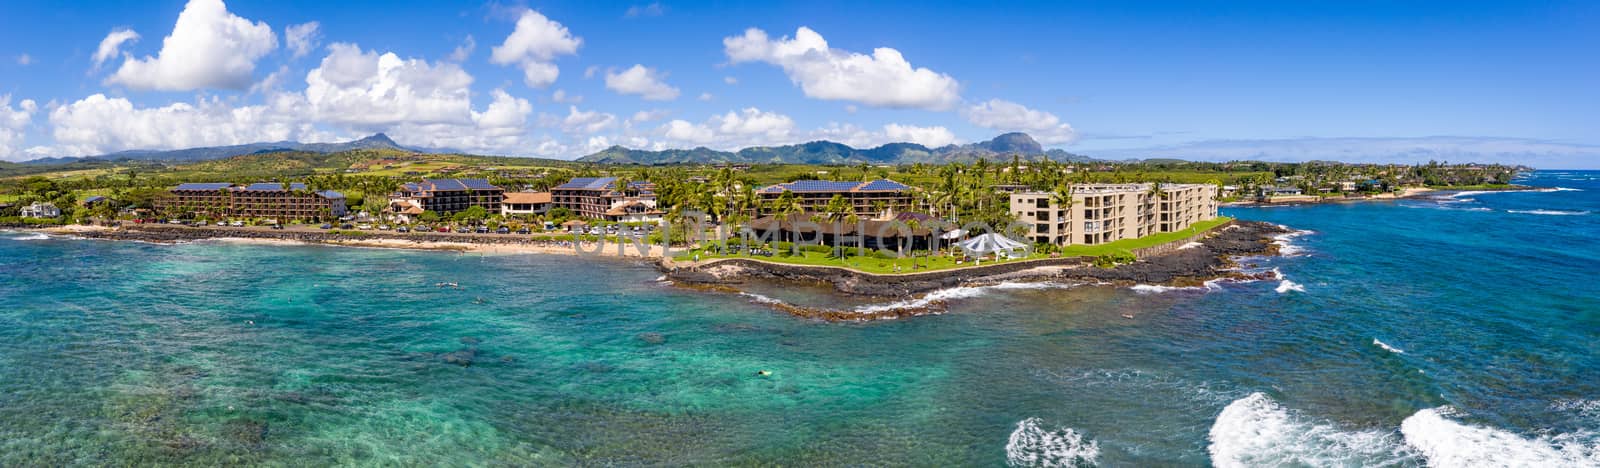 Aerial drone shot of Lawai Beach on the south shore of Kauai in Hawaii by steheap